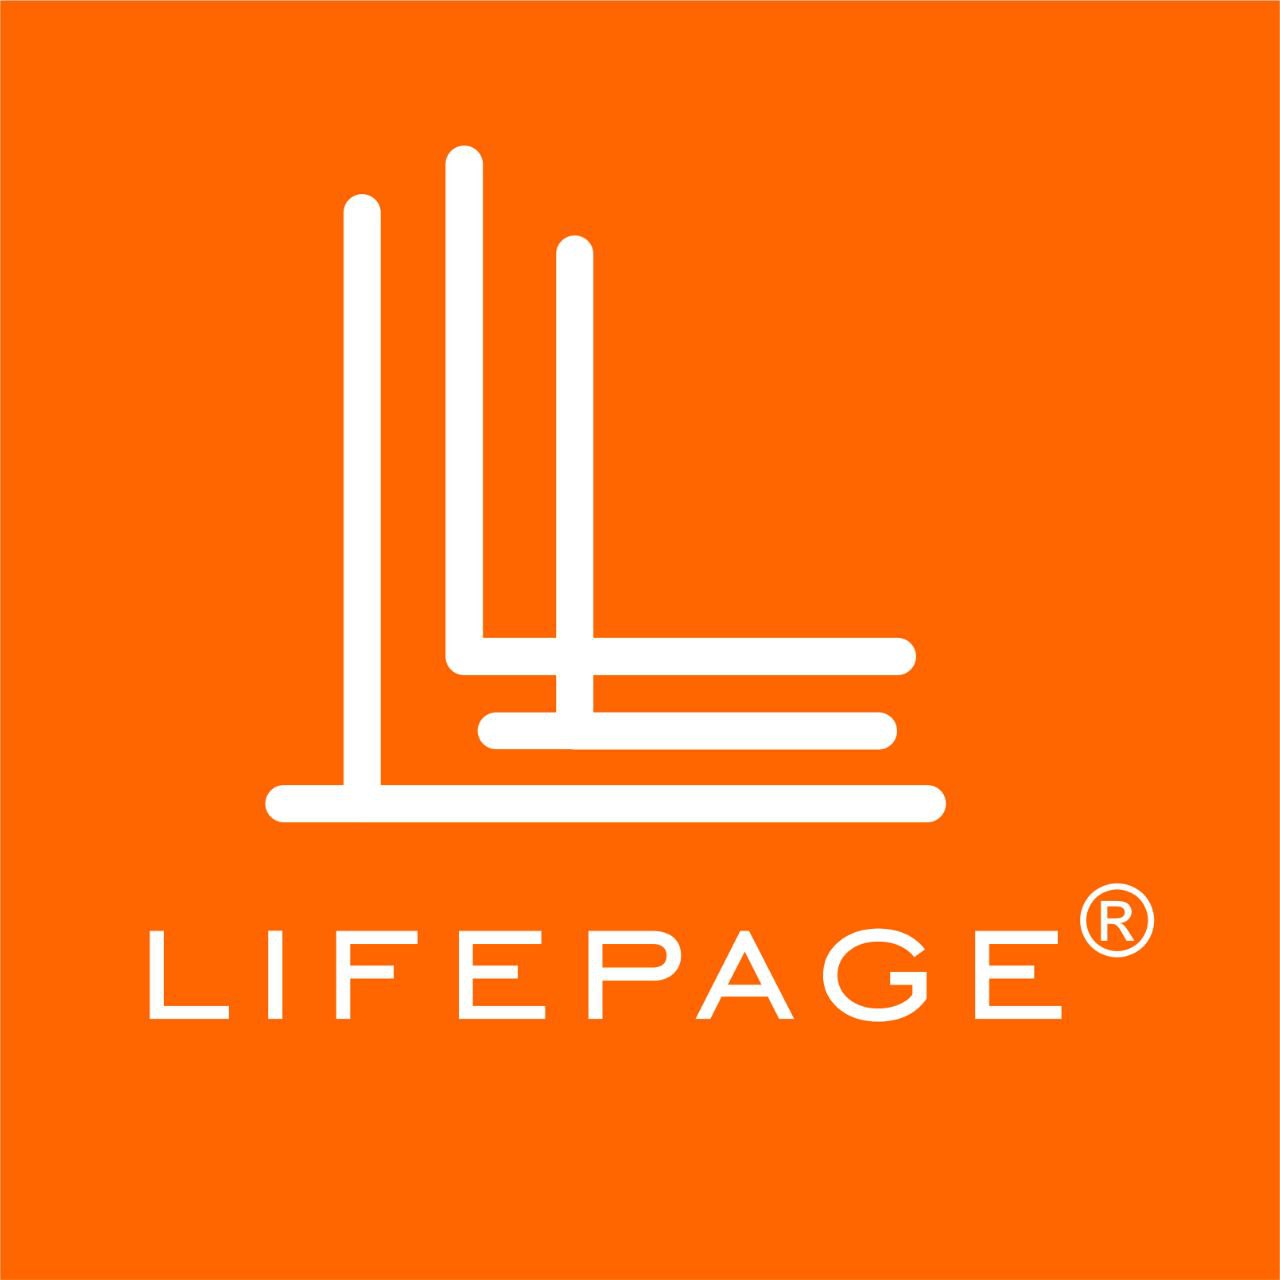 Lifepage